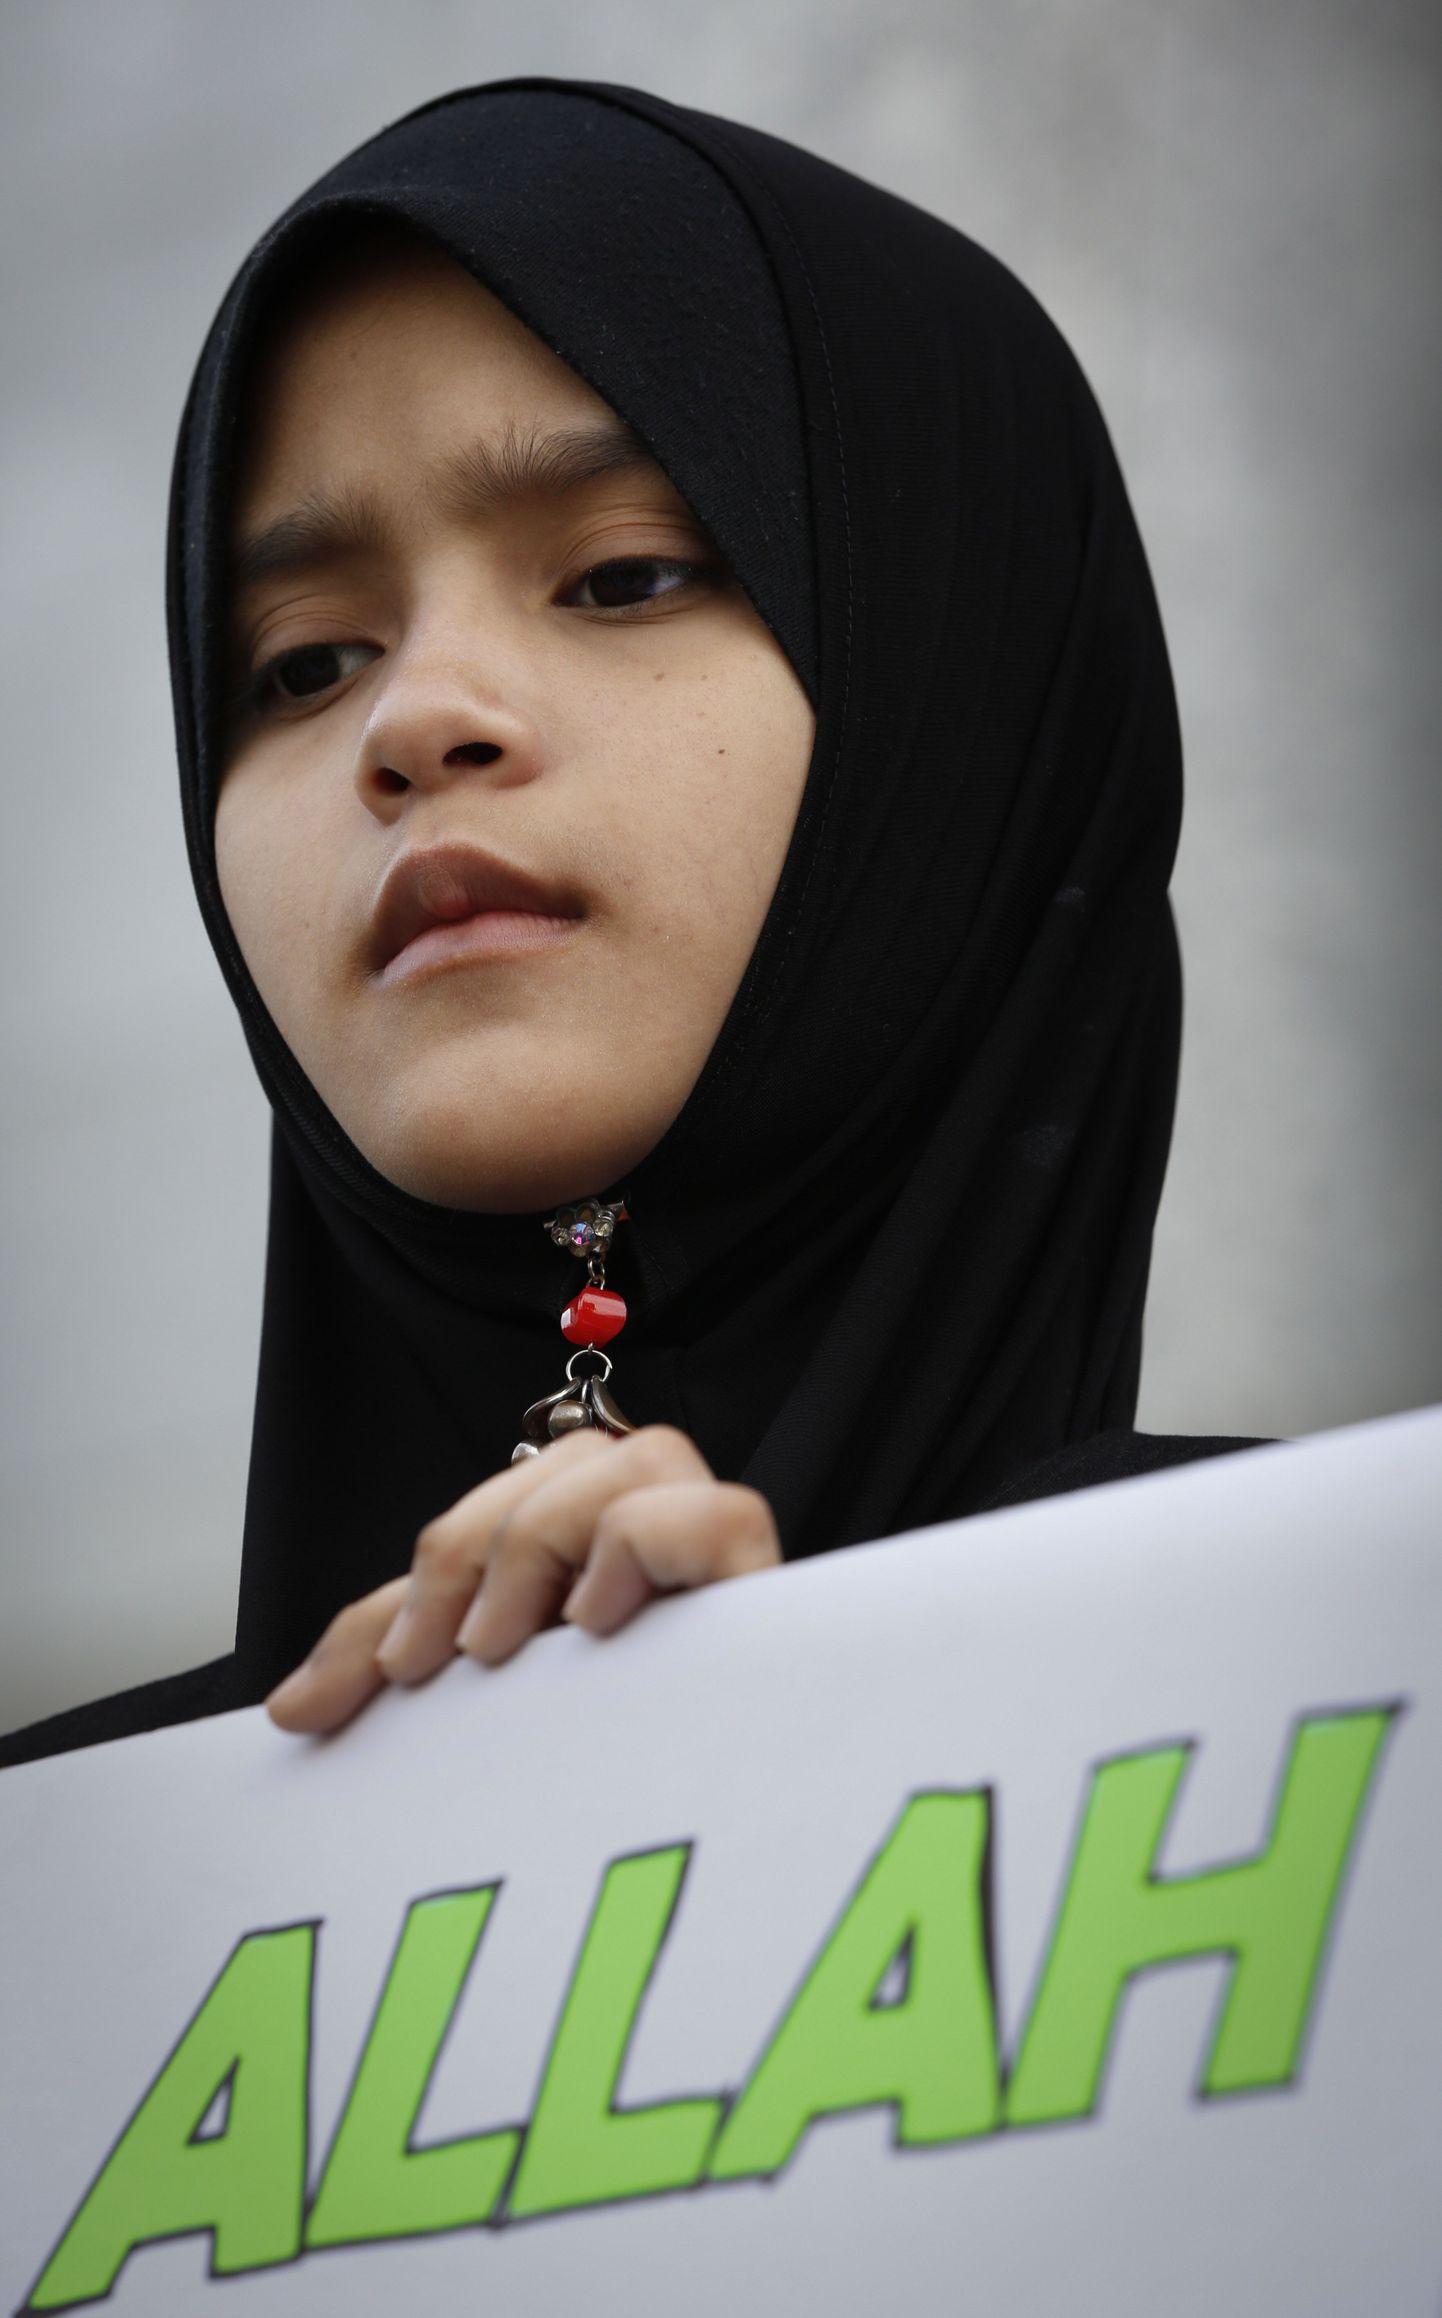 Malaislane Kuala Lumpuris kohtumaja ees protestimas.